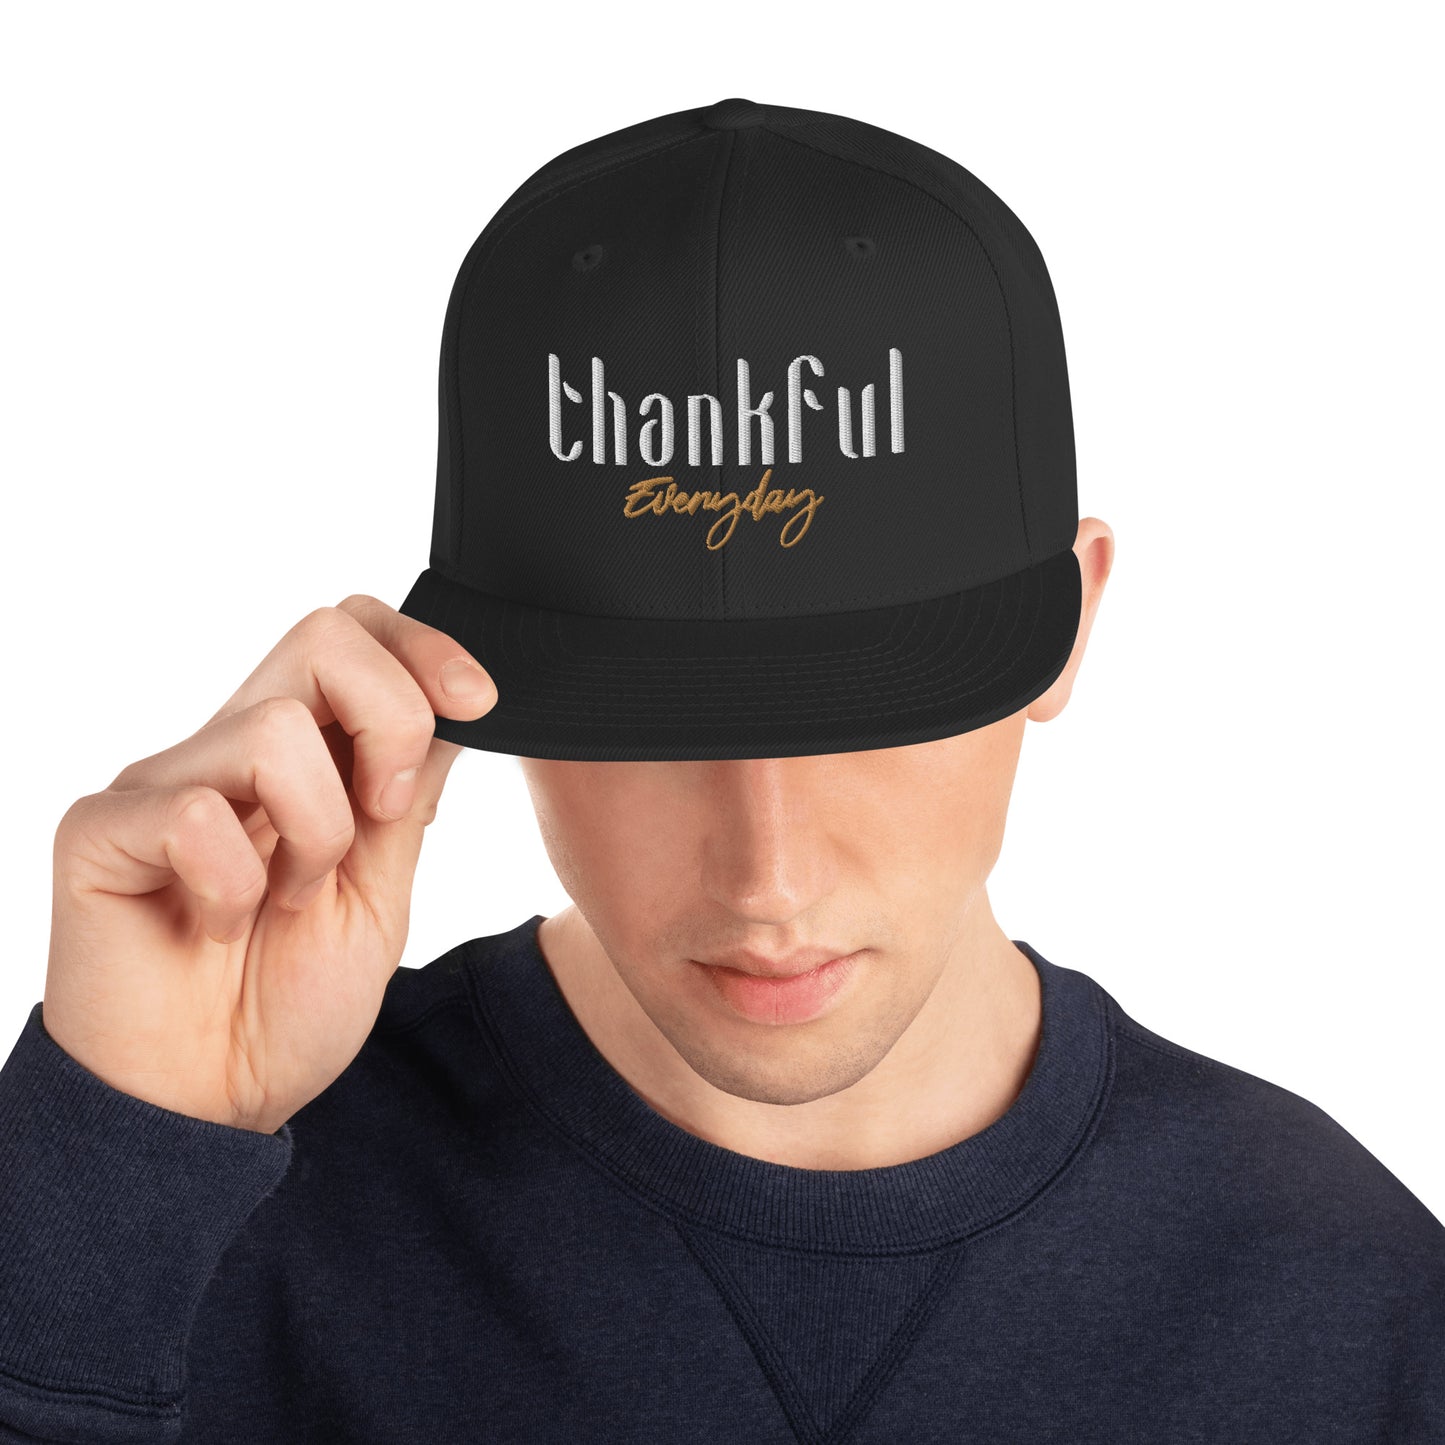 "Thankful Everyday" Snapback